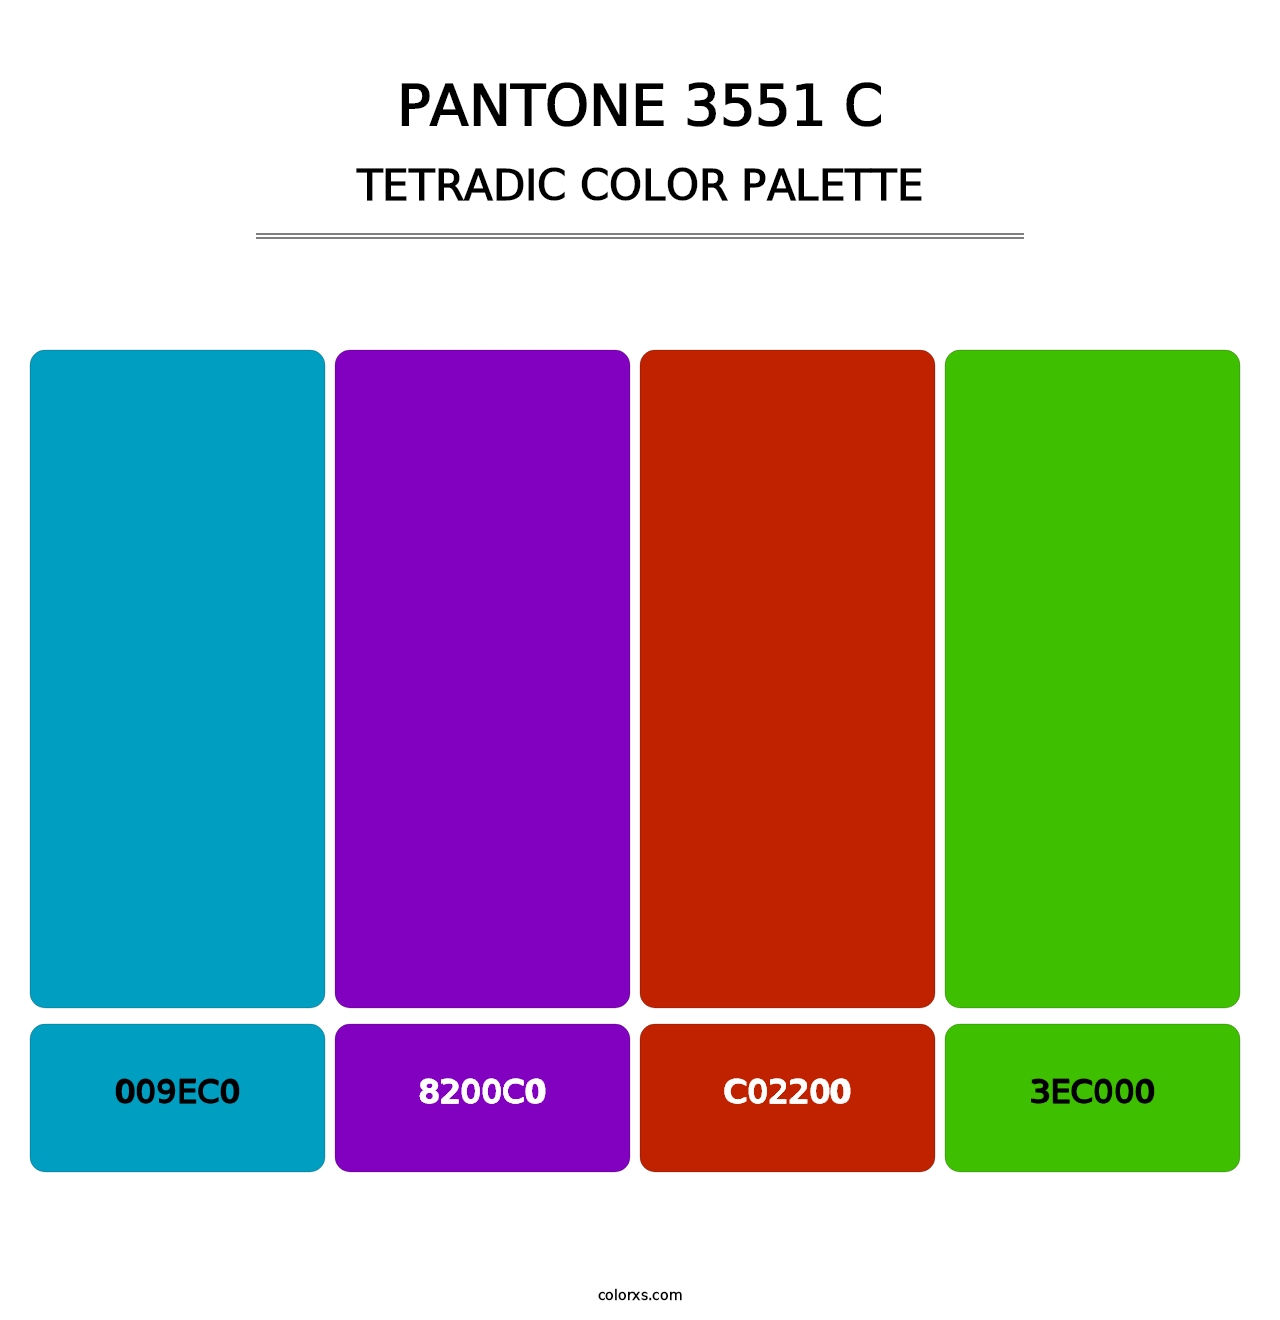 PANTONE 3551 C - Tetradic Color Palette